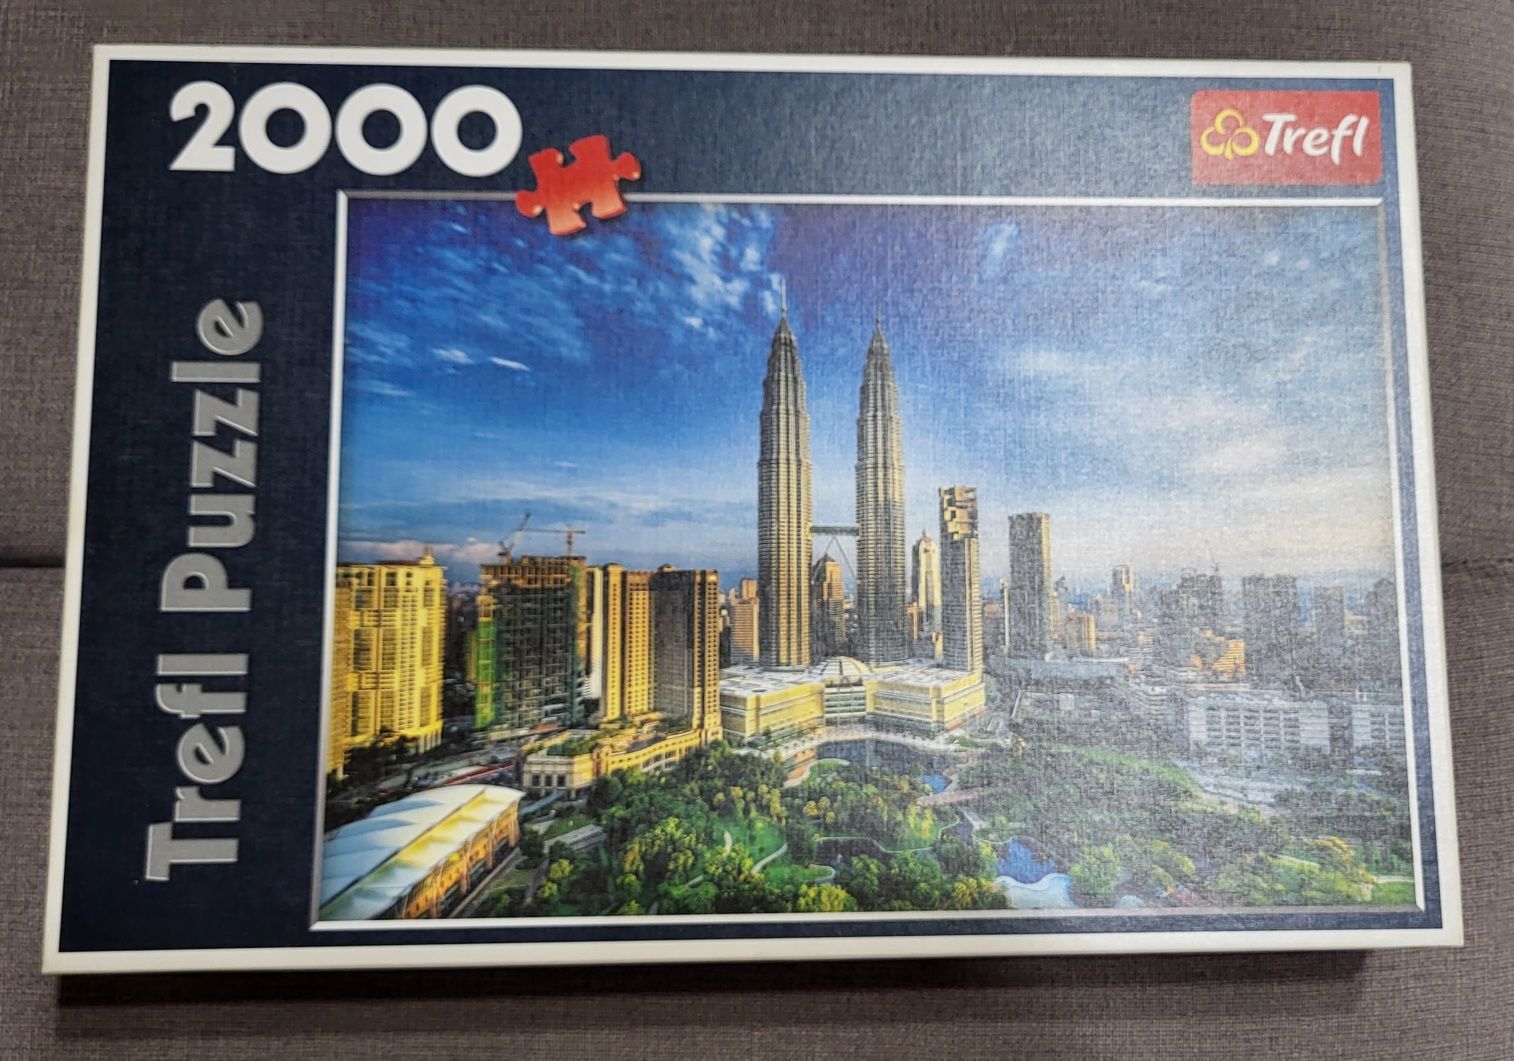 Puzzle trefl 2000